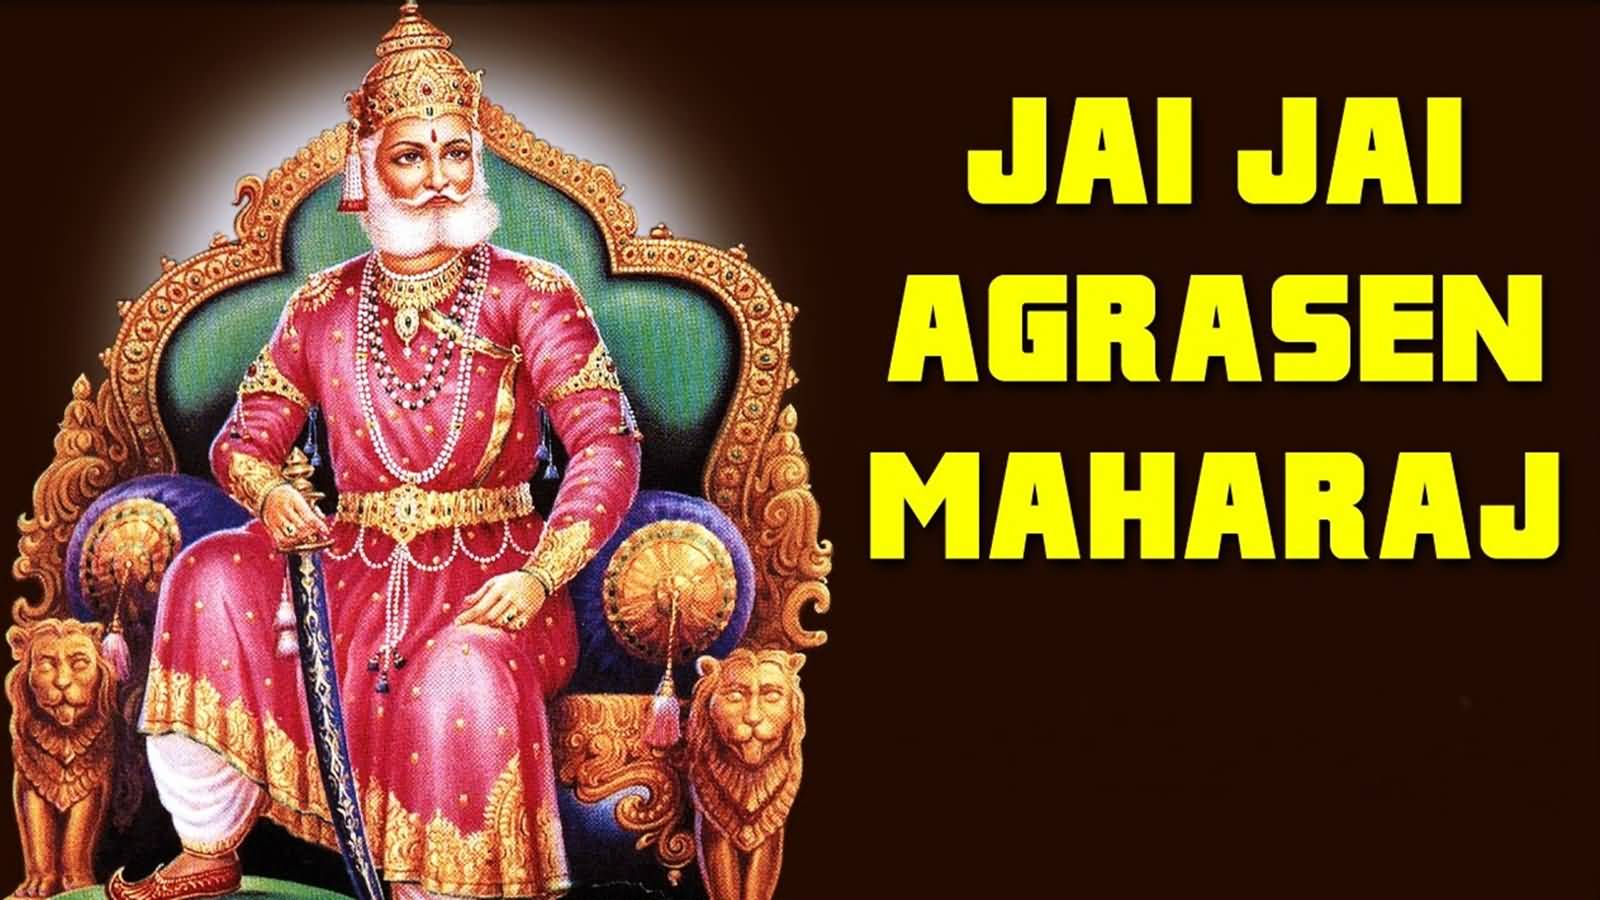 महाराज अग्रसेन स्लोगन 2018 - Maharaj Agrasen Slogan in Hindi 2018 for Facebook and Whatsapp